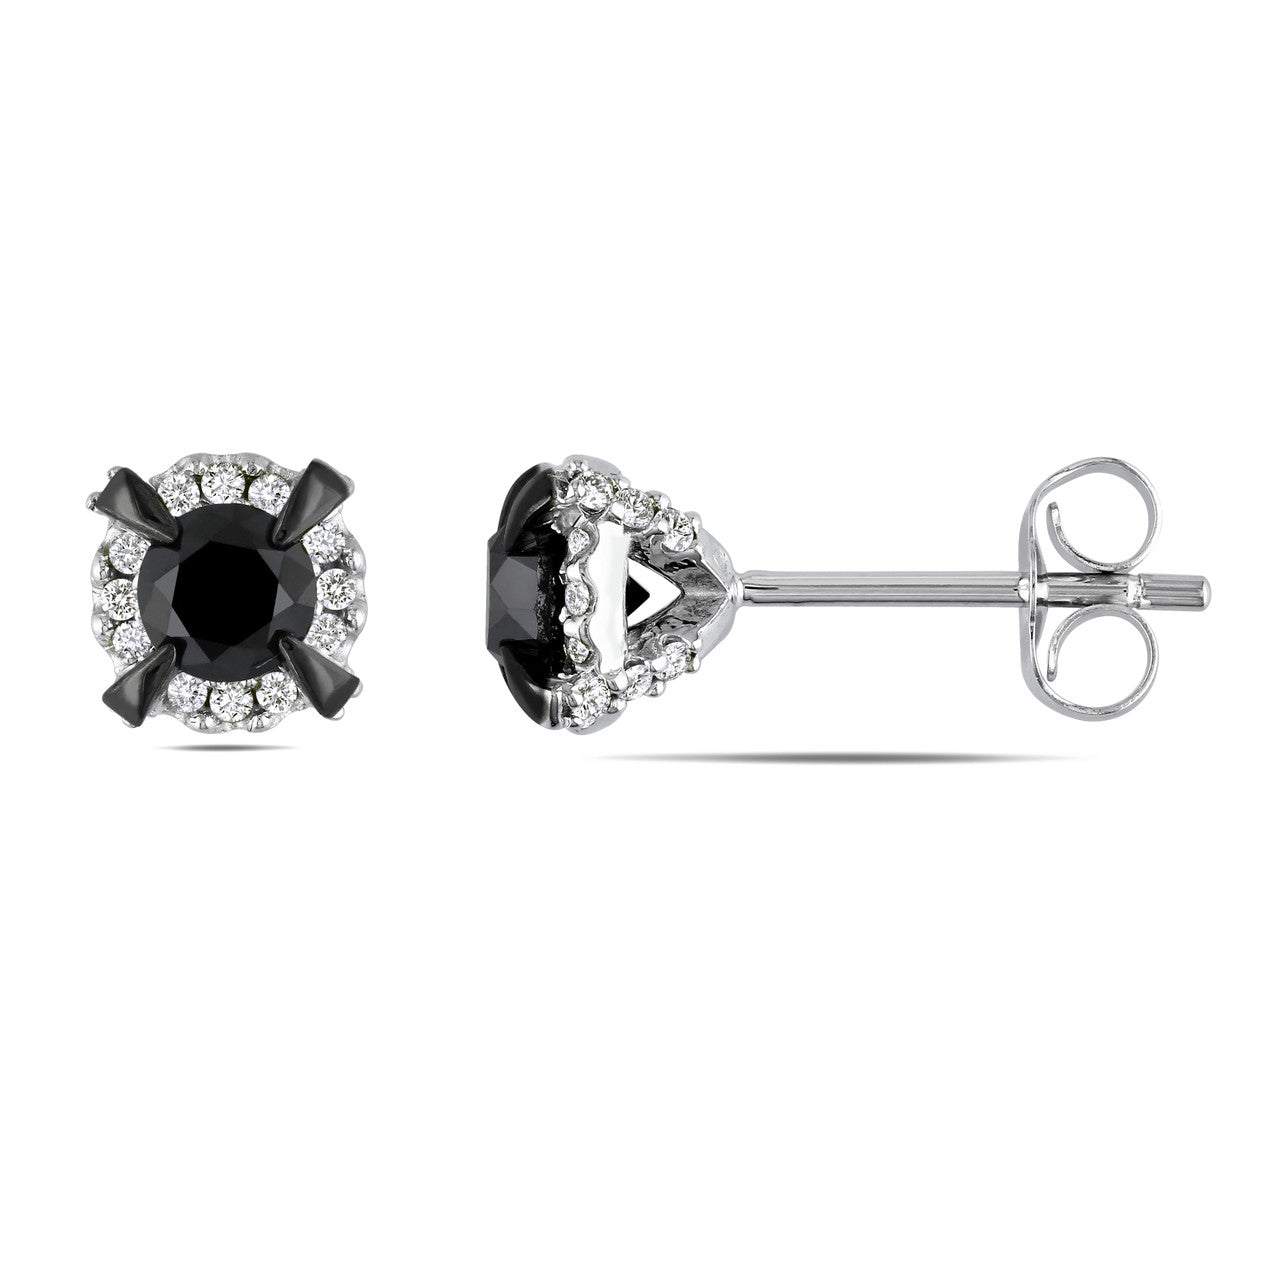 Ice Jewellery 1 CT Black & White Diamond TW Ear Pin Earrings 10k White Gold GH I2;I3 Black Rhodium Plated - 7500043865 | Ice Jewellery Australia